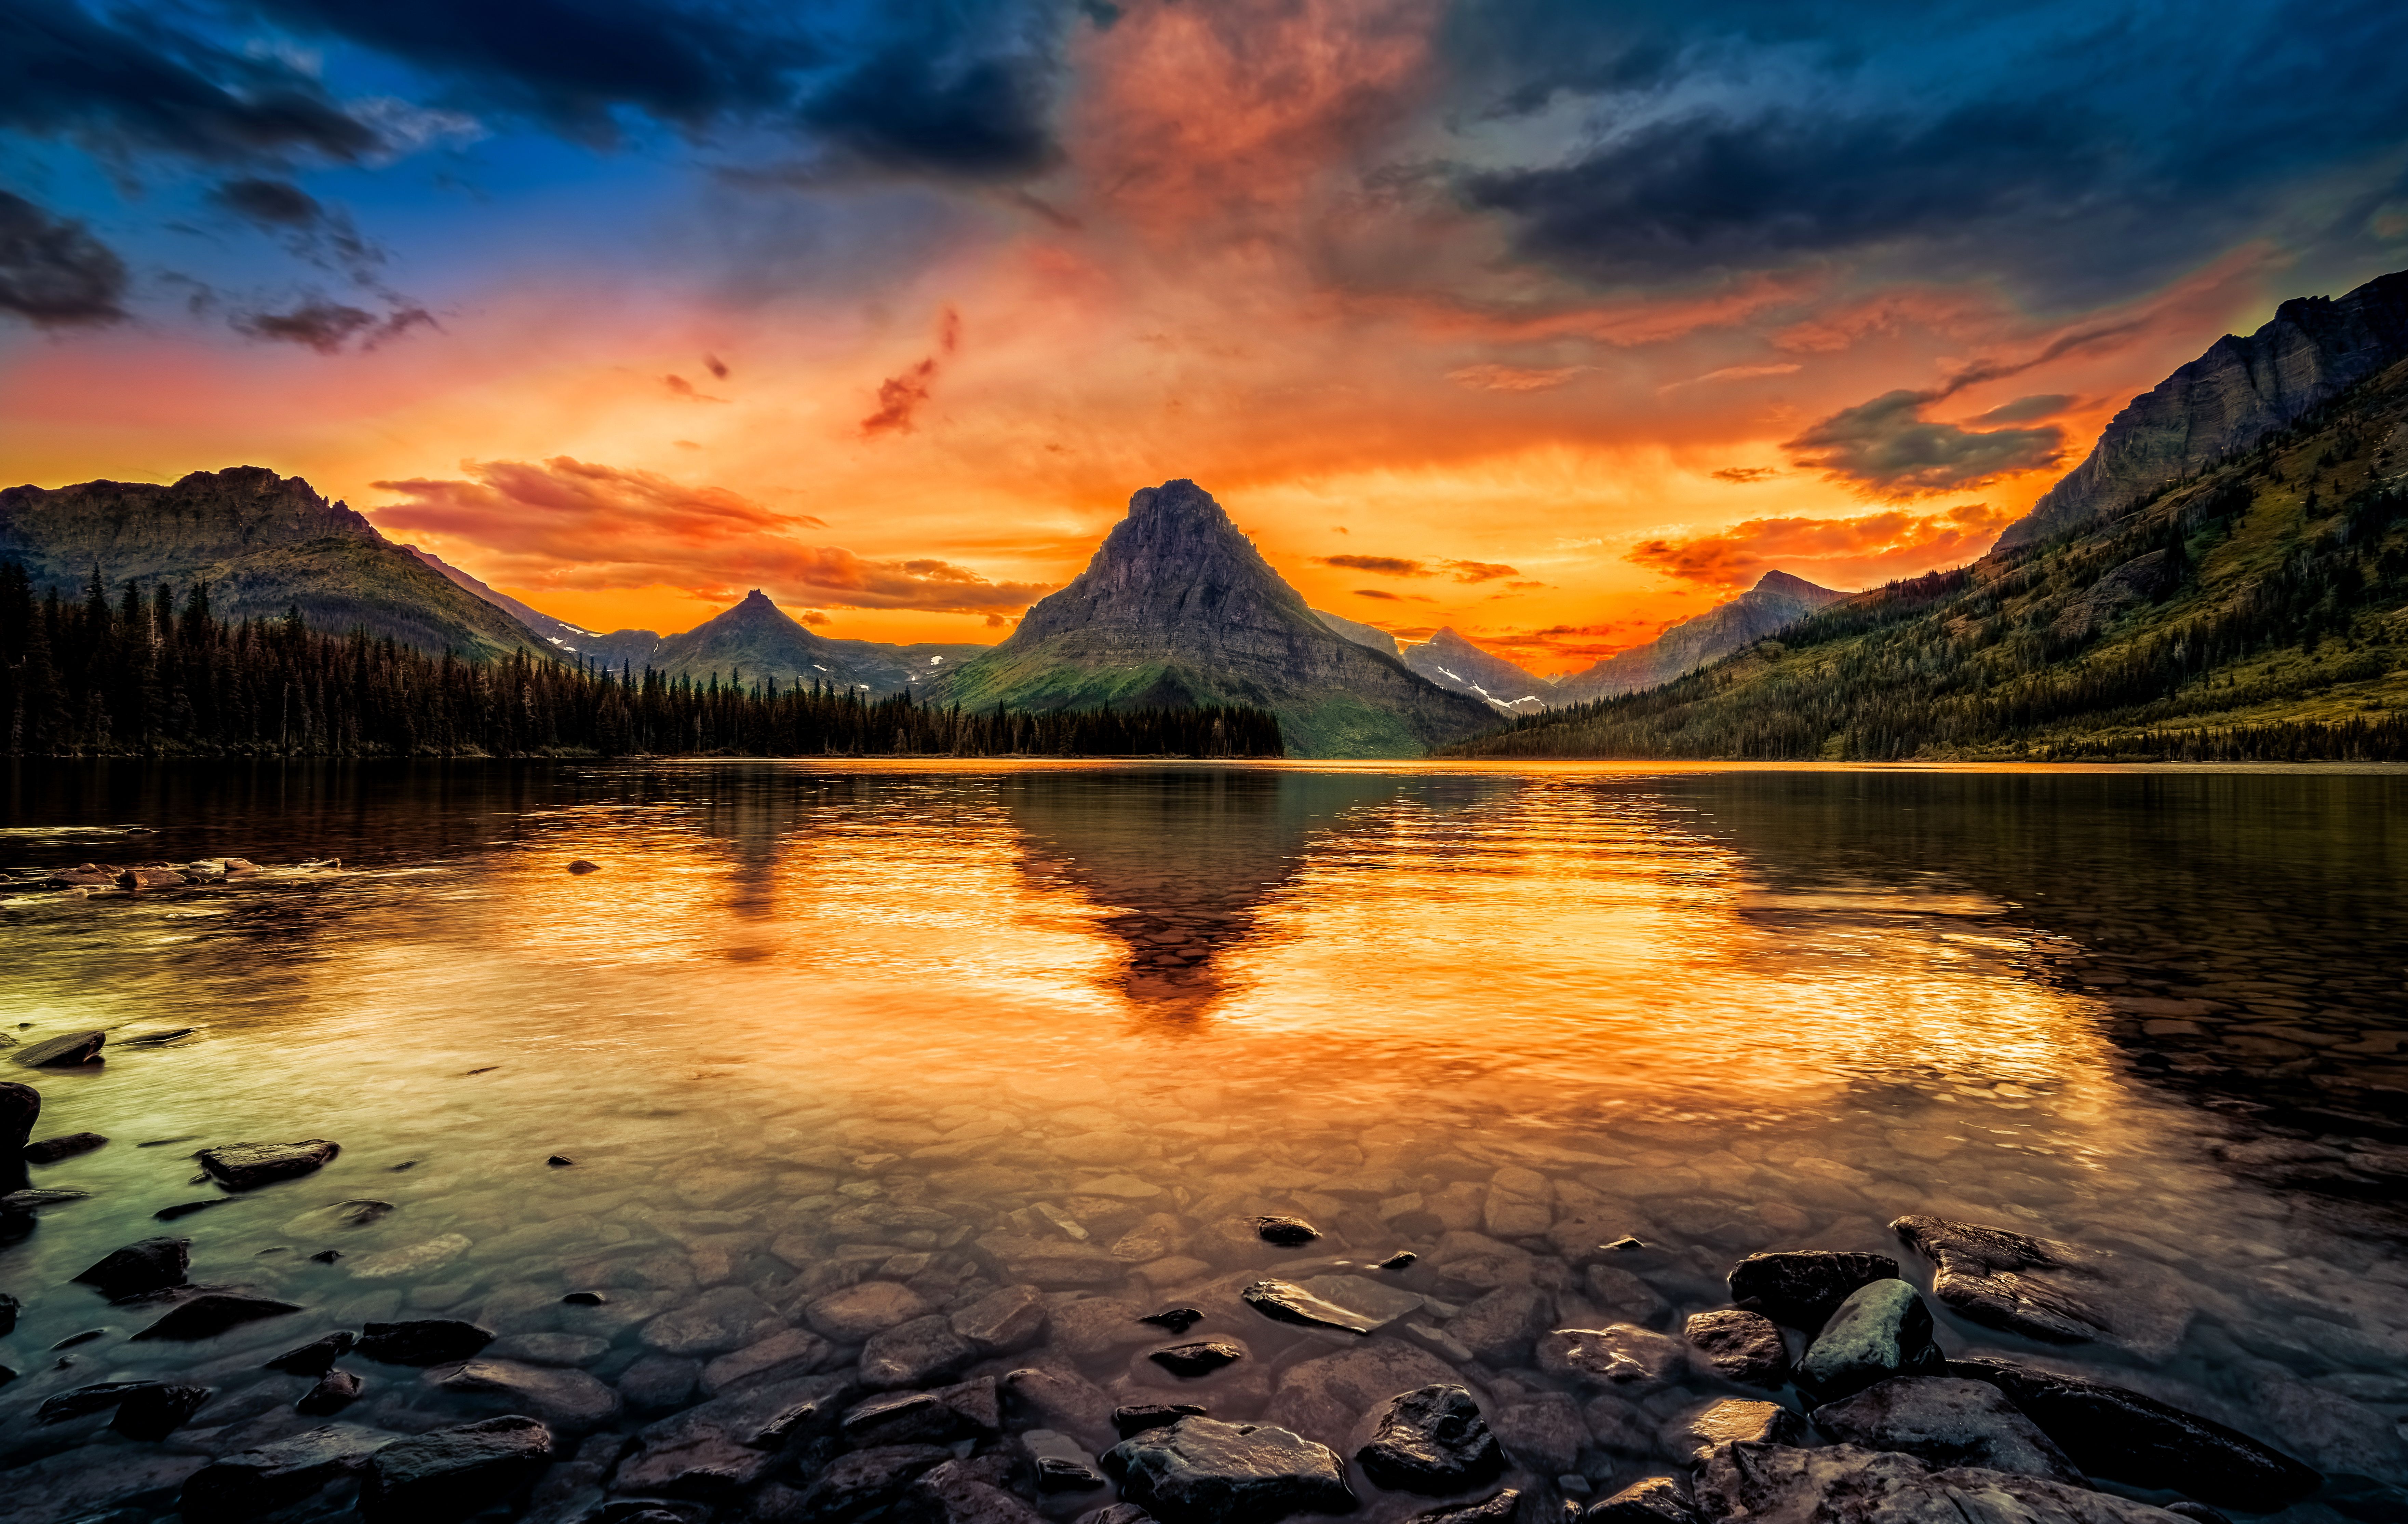 USA Lake Glacier National Park Forest Mountain Stone Sky Sunset Nature Reflection Landscape Wallpaper:7045x4460